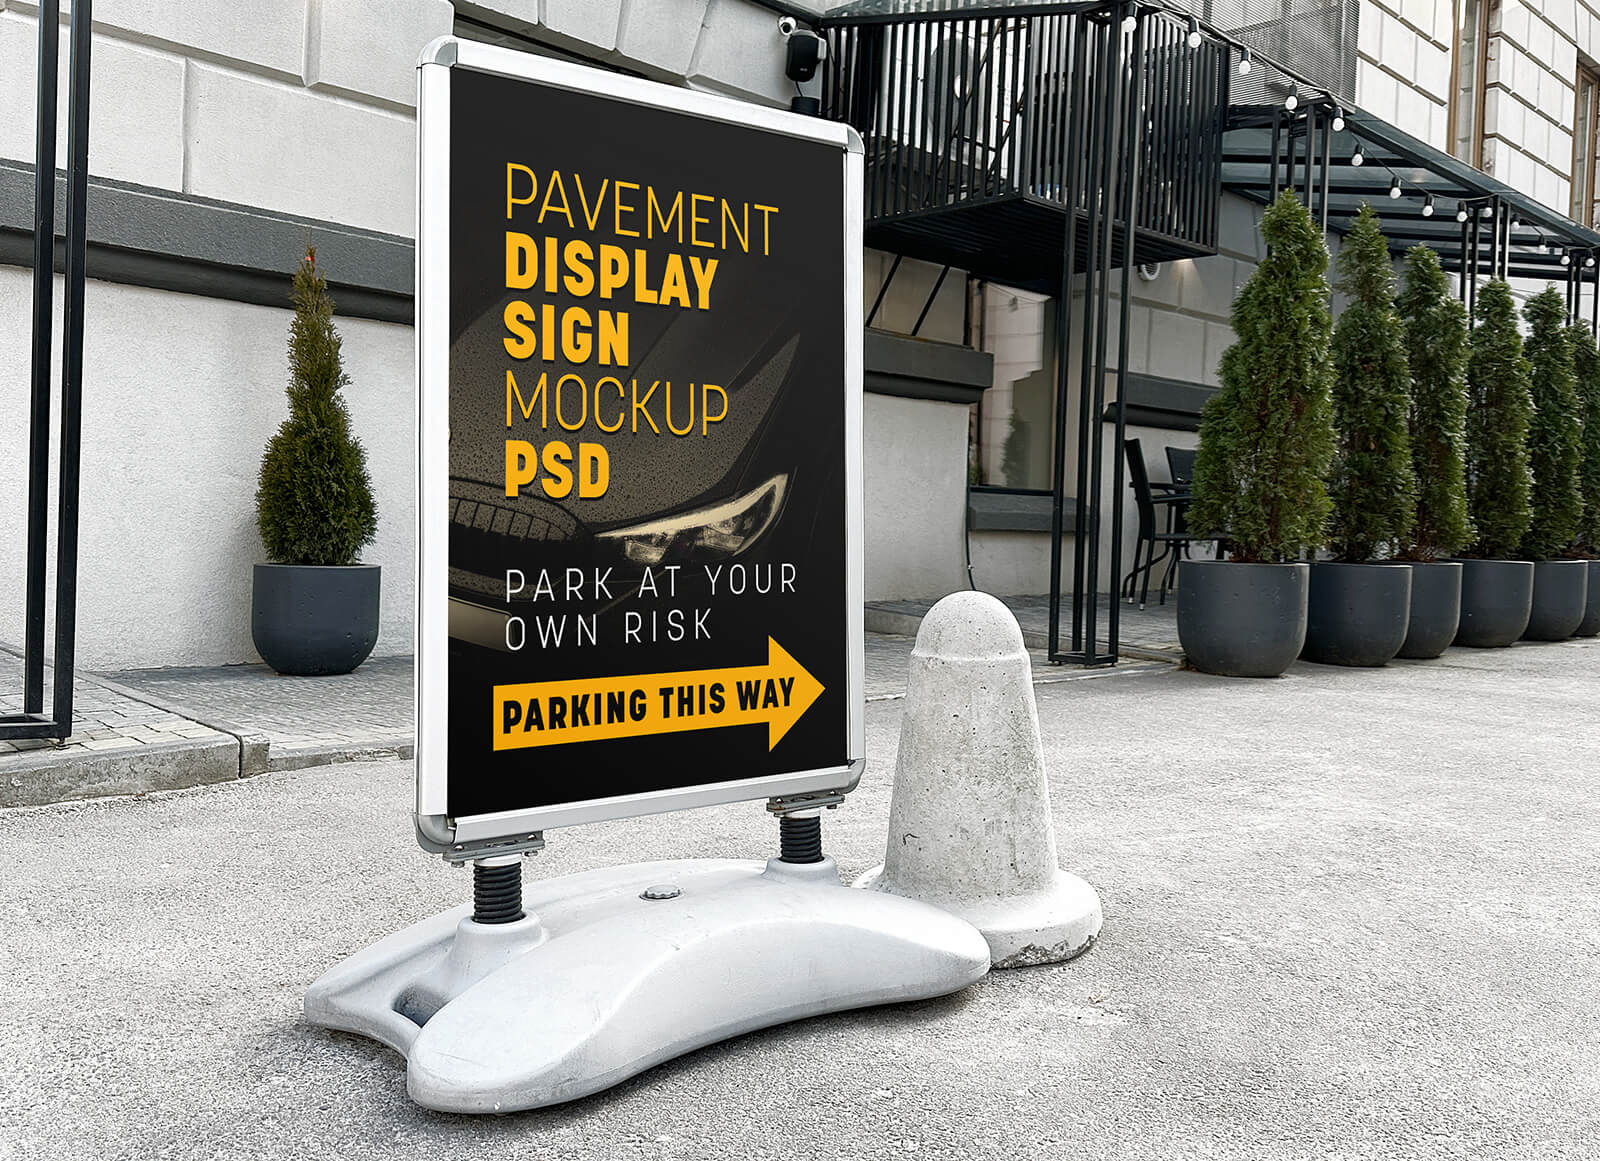 Free-Water-Based-Pavement-Display-Sign-Mockup-PSD